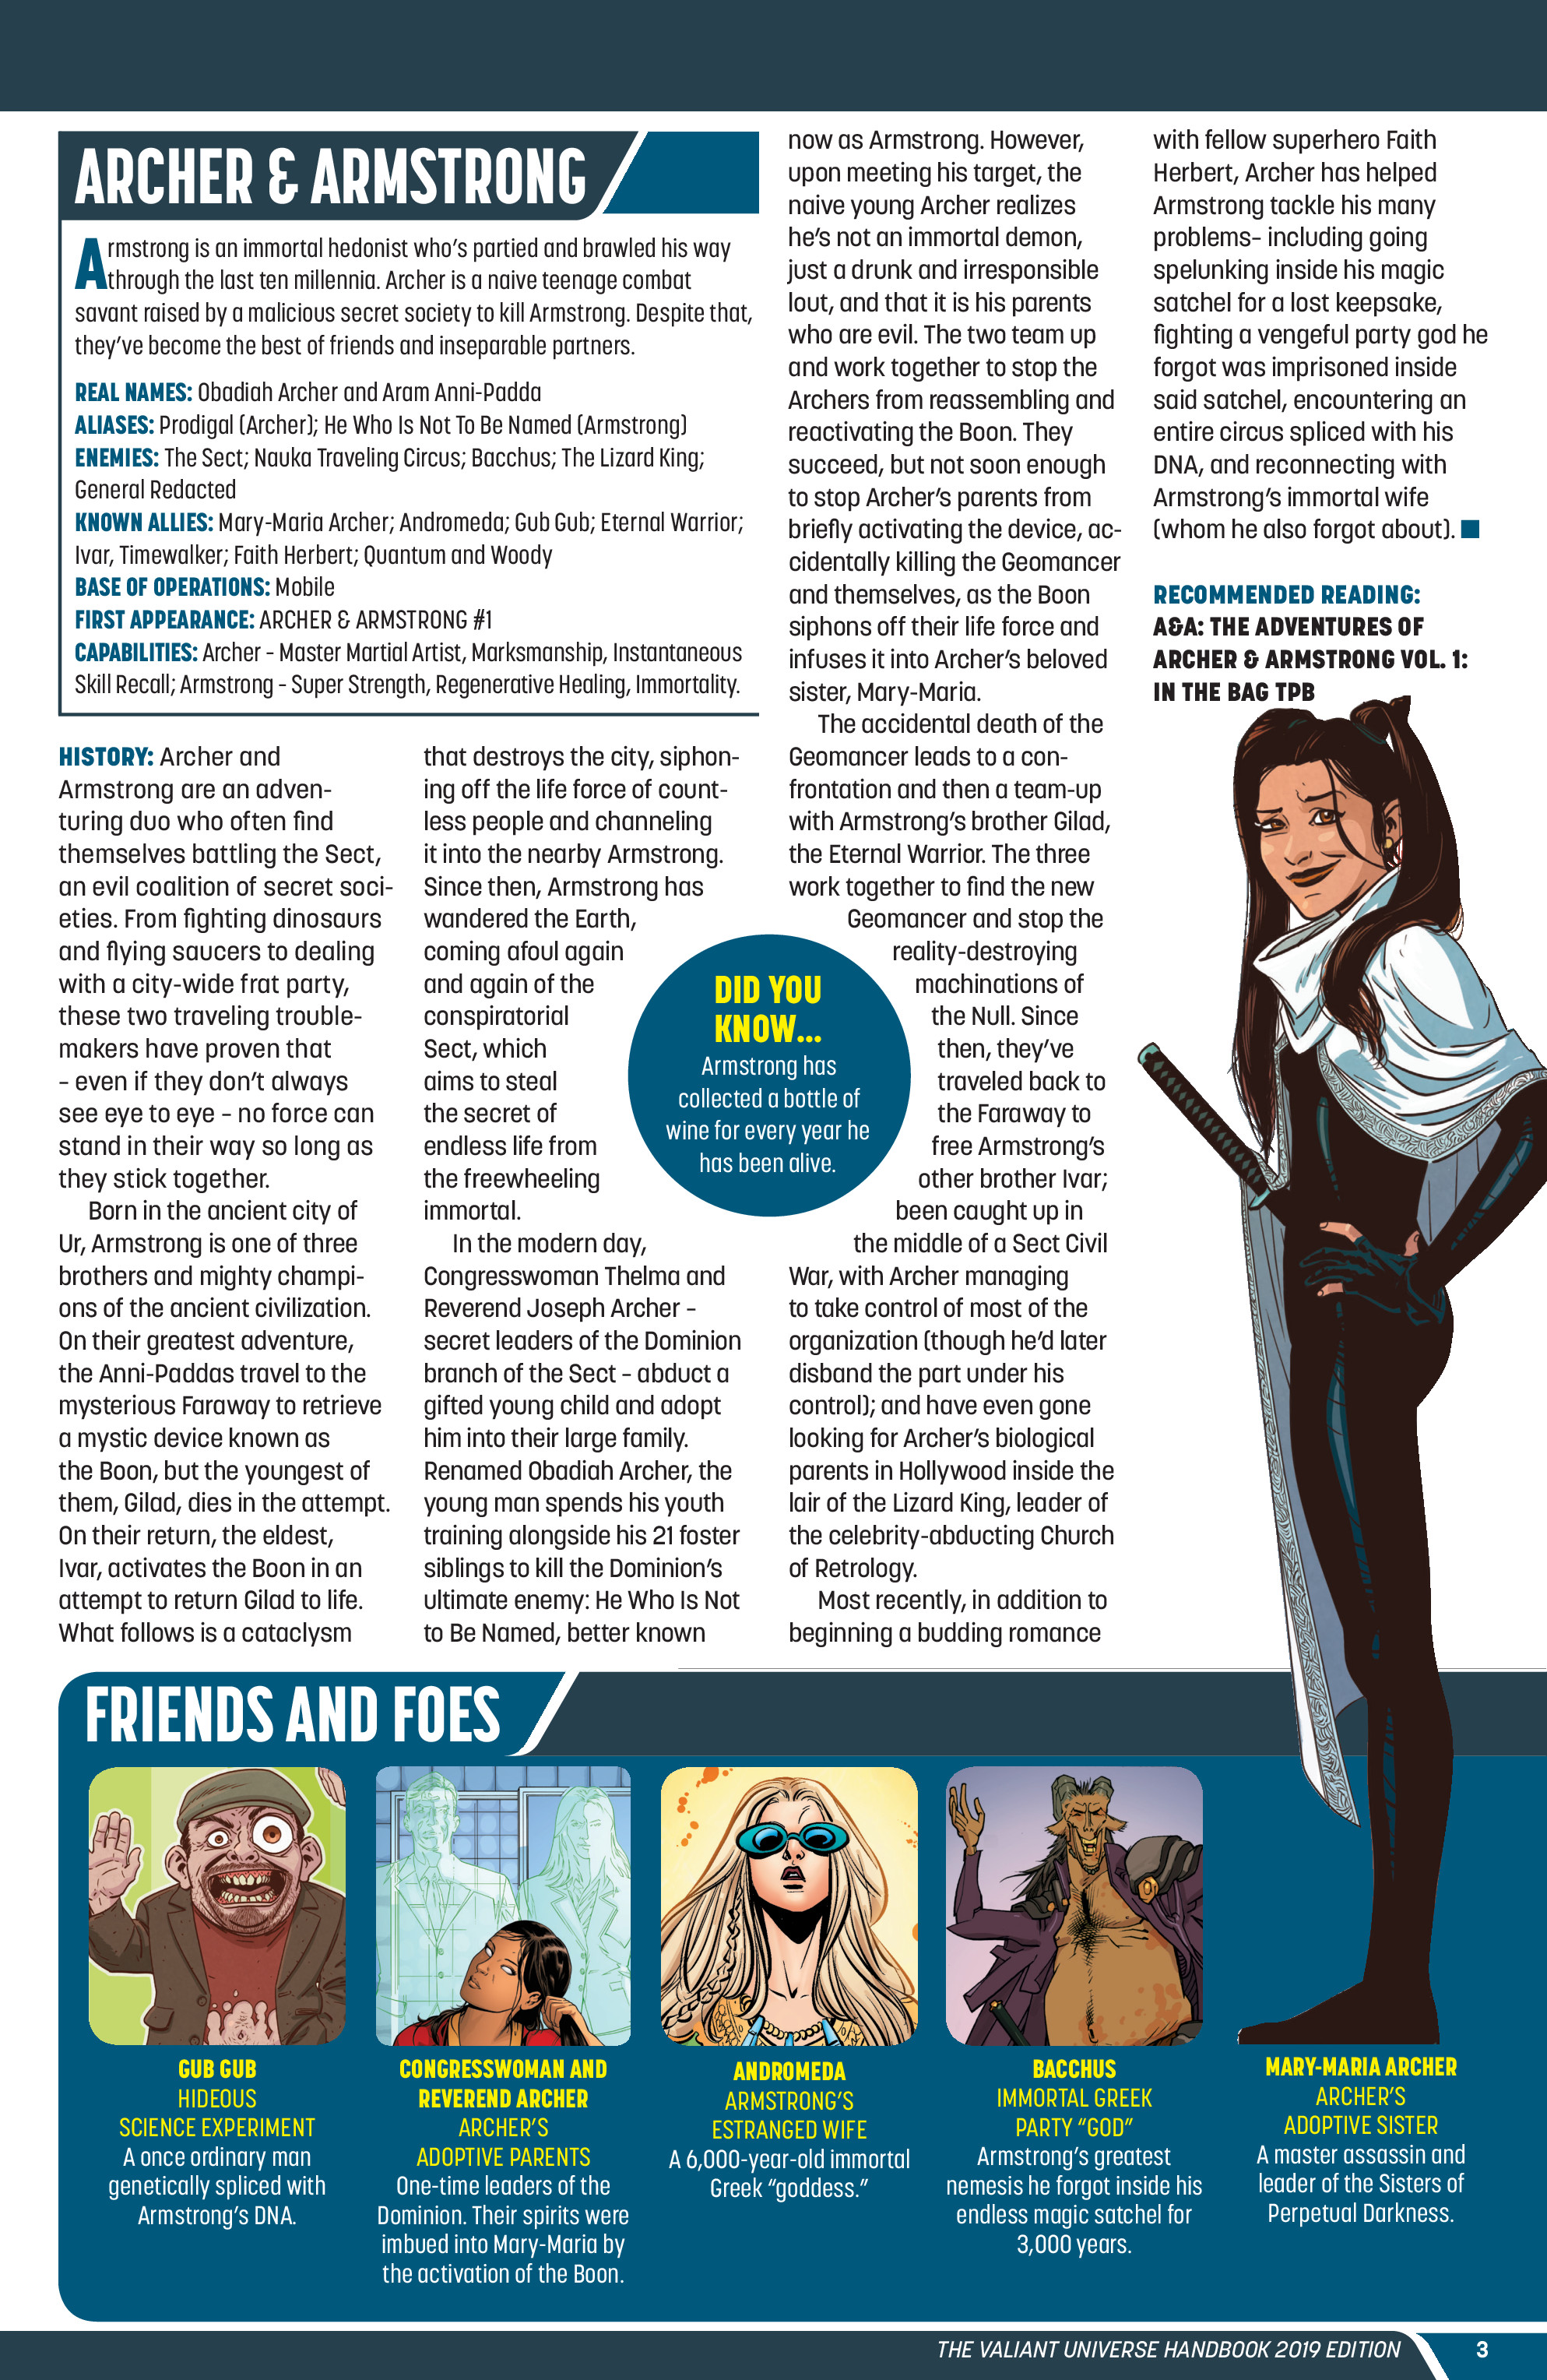 Read online Valiant Universe Handbook 2019 Edition comic -  Issue # Full - 5